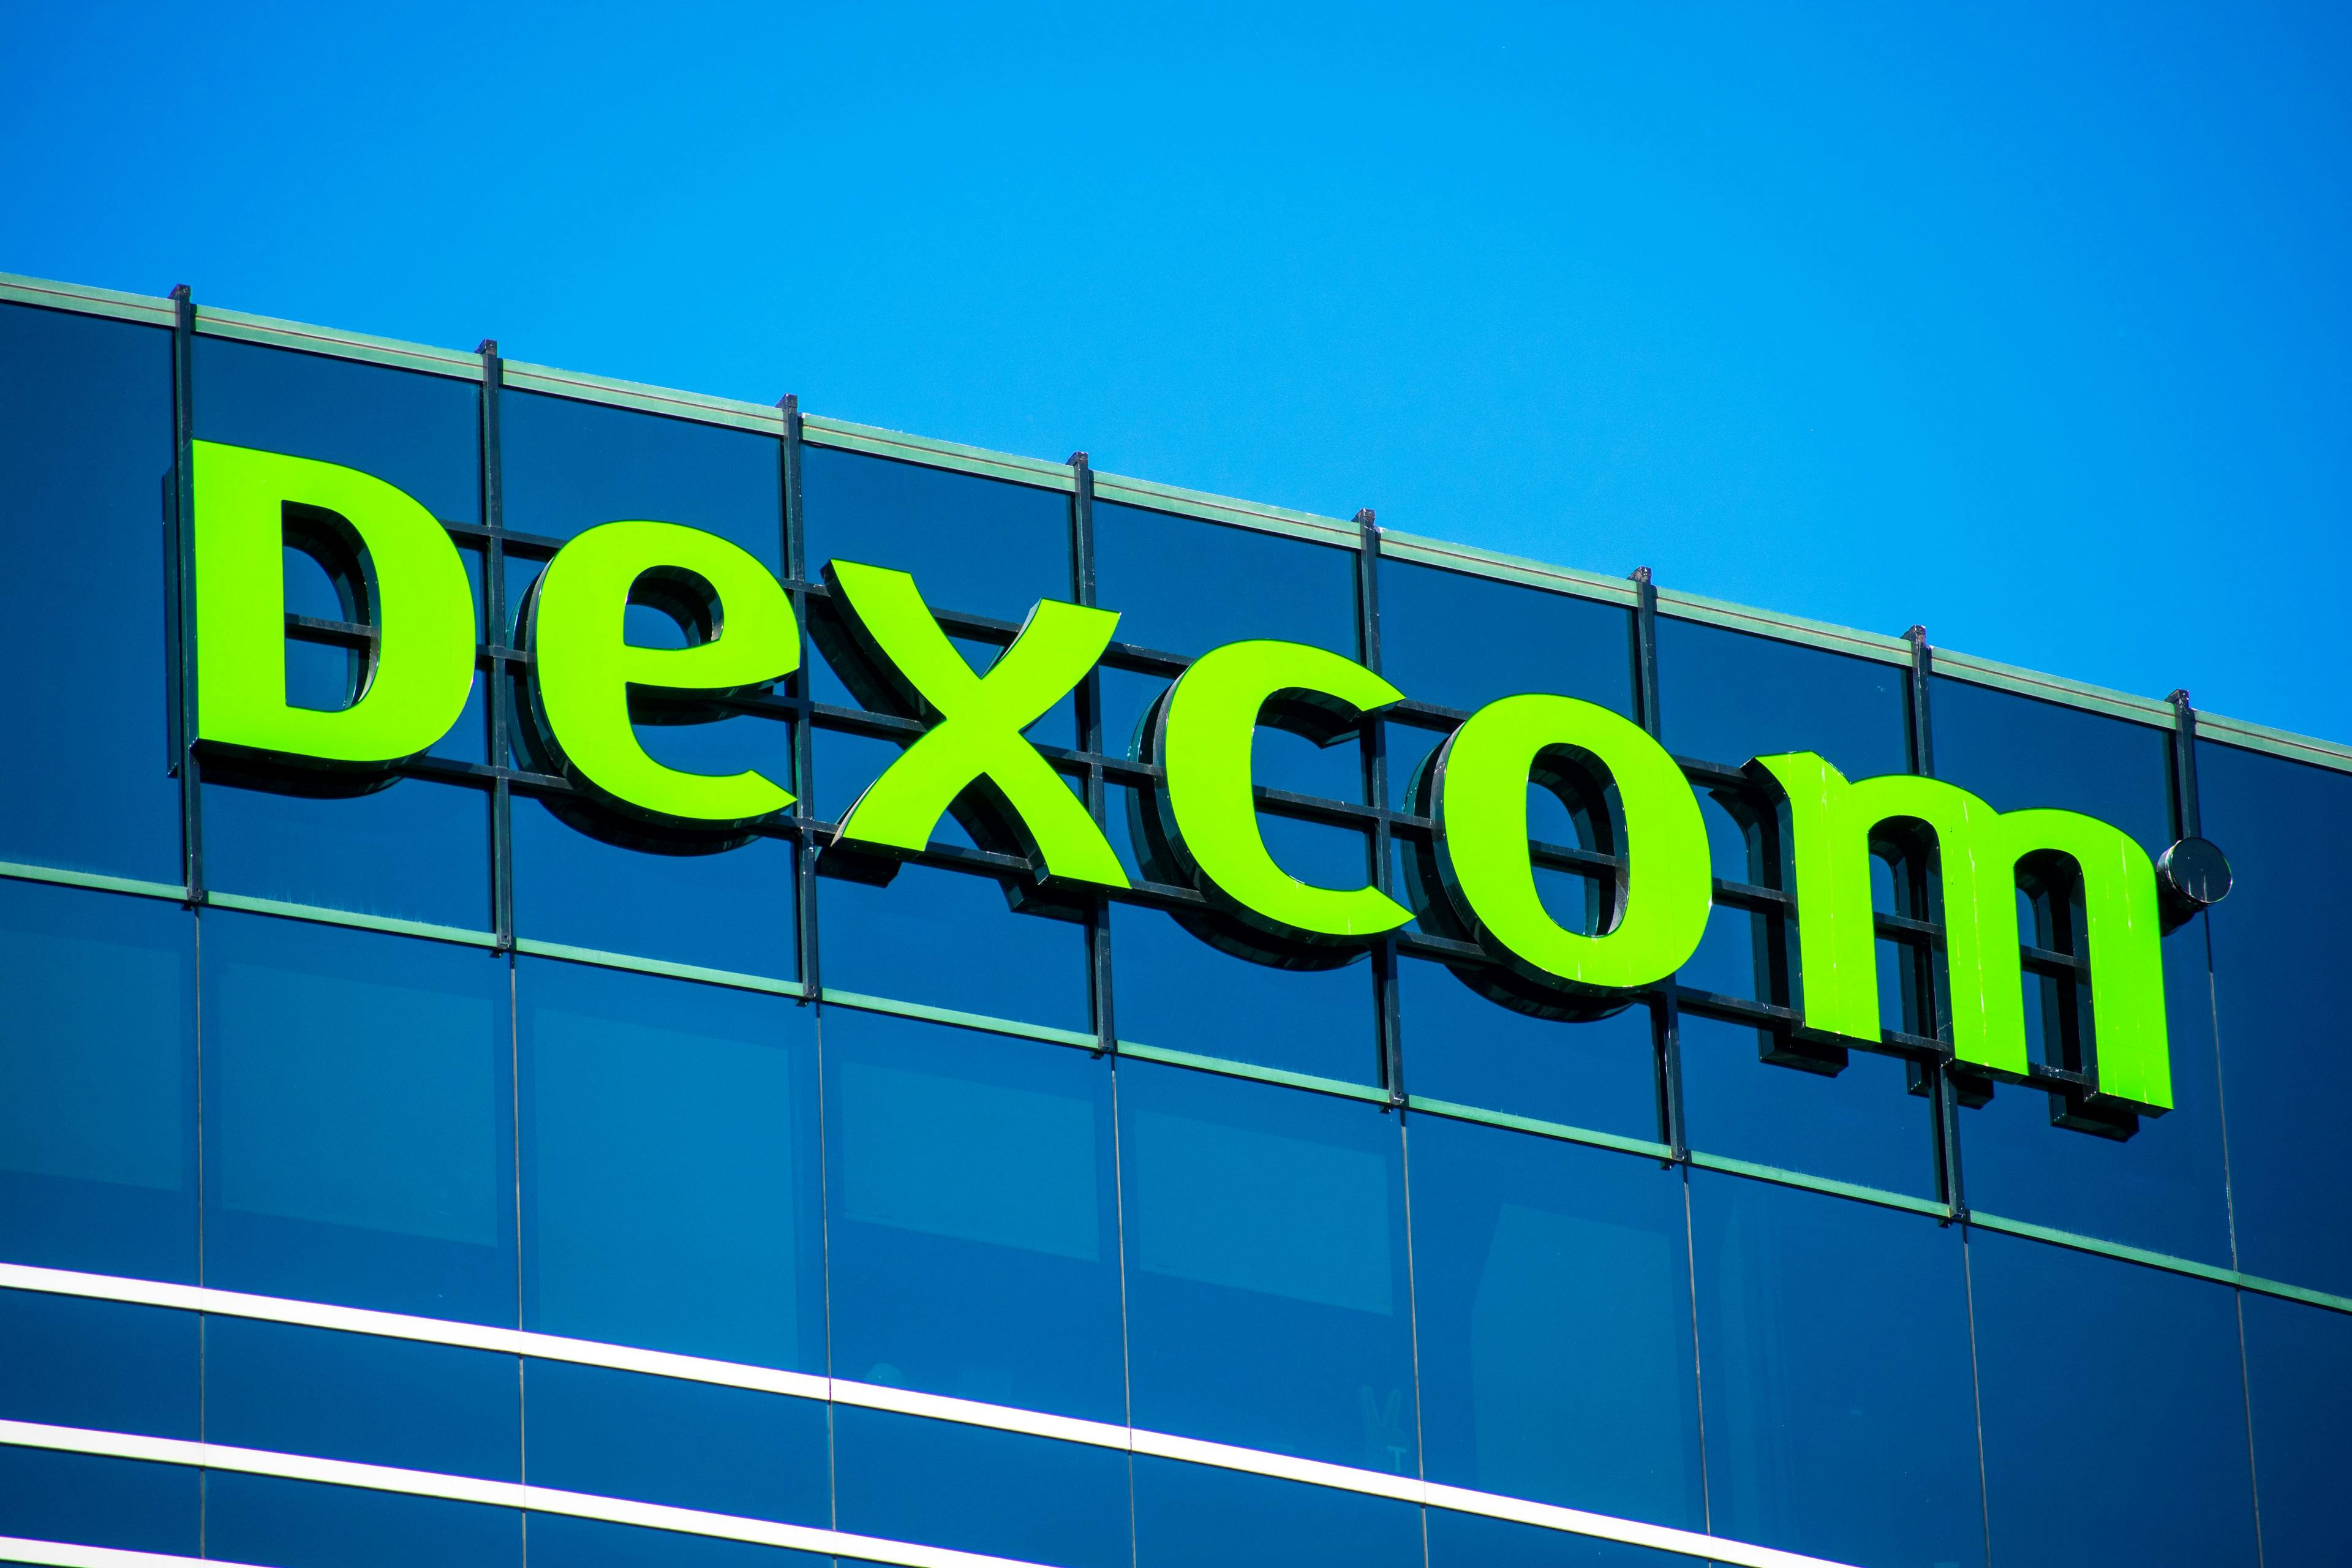 Stelo is based on the existing Dexcom G7 CGM platform. | Image credit: MichaelVi - stock.adobe.com